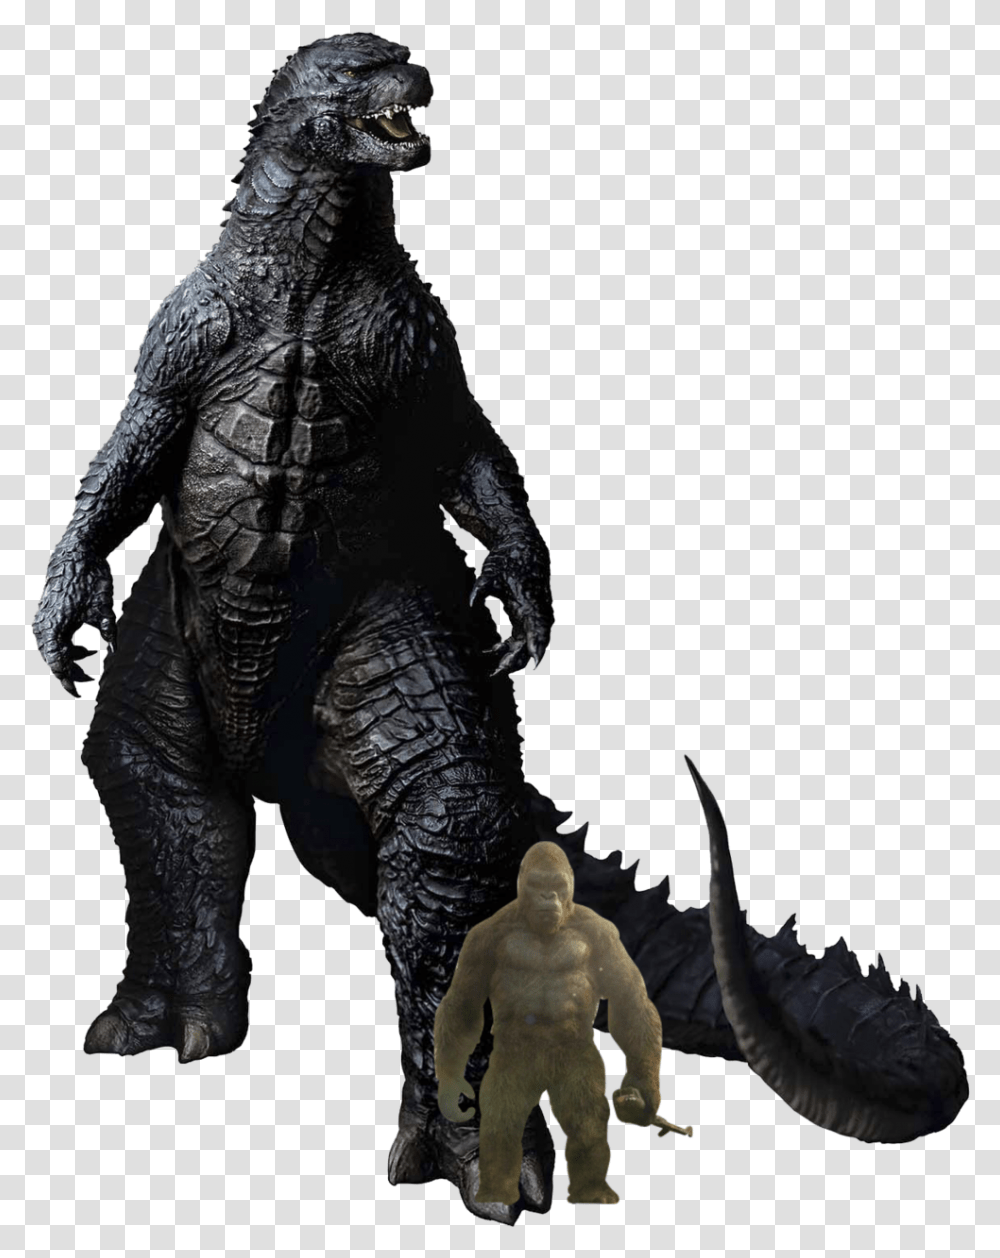 Godzilla 2014 Vs Kong 2017 Size, Animal, Dinosaur, Reptile, Alien Transparent Png